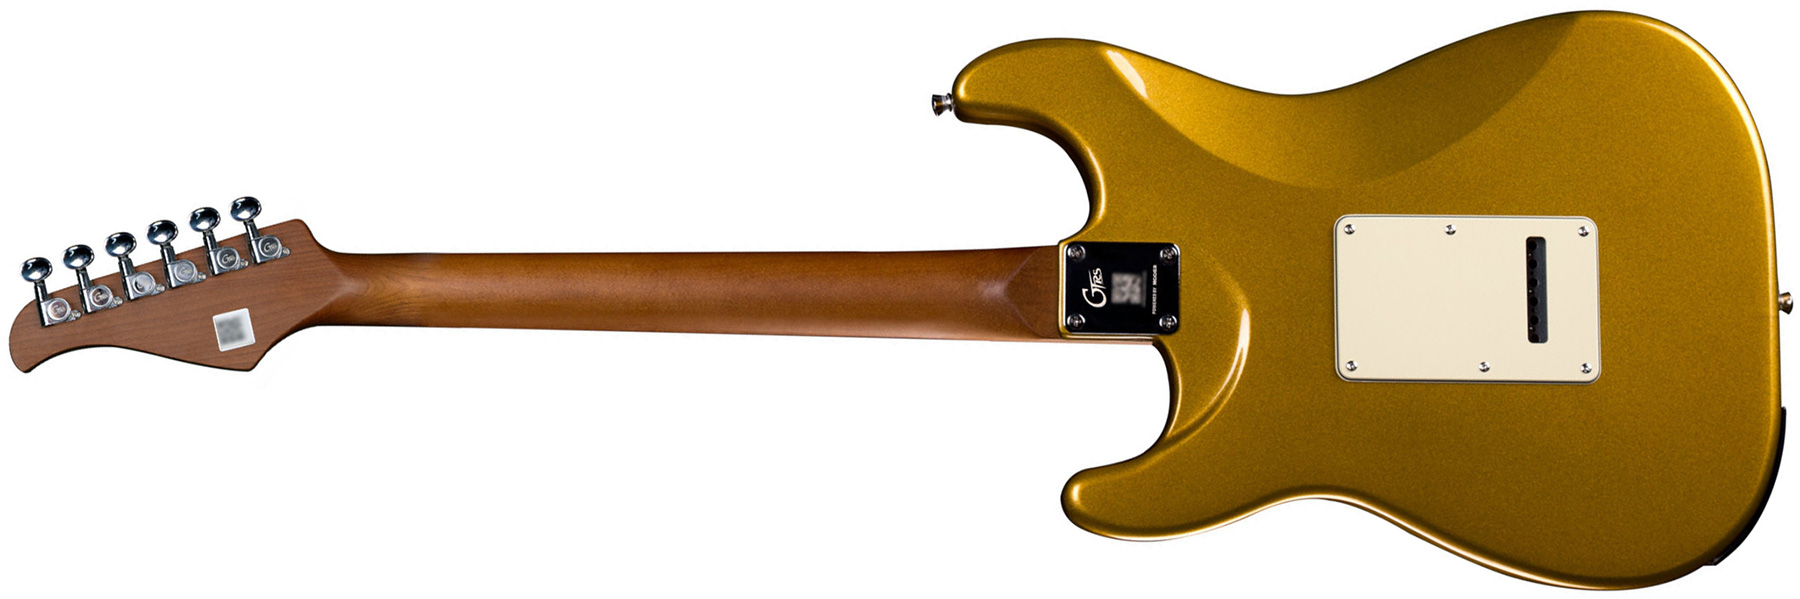 Mooer Gtrs S800 Hss Trem Rw - Gold - Guitarra eléctrica de modelización - Variation 1